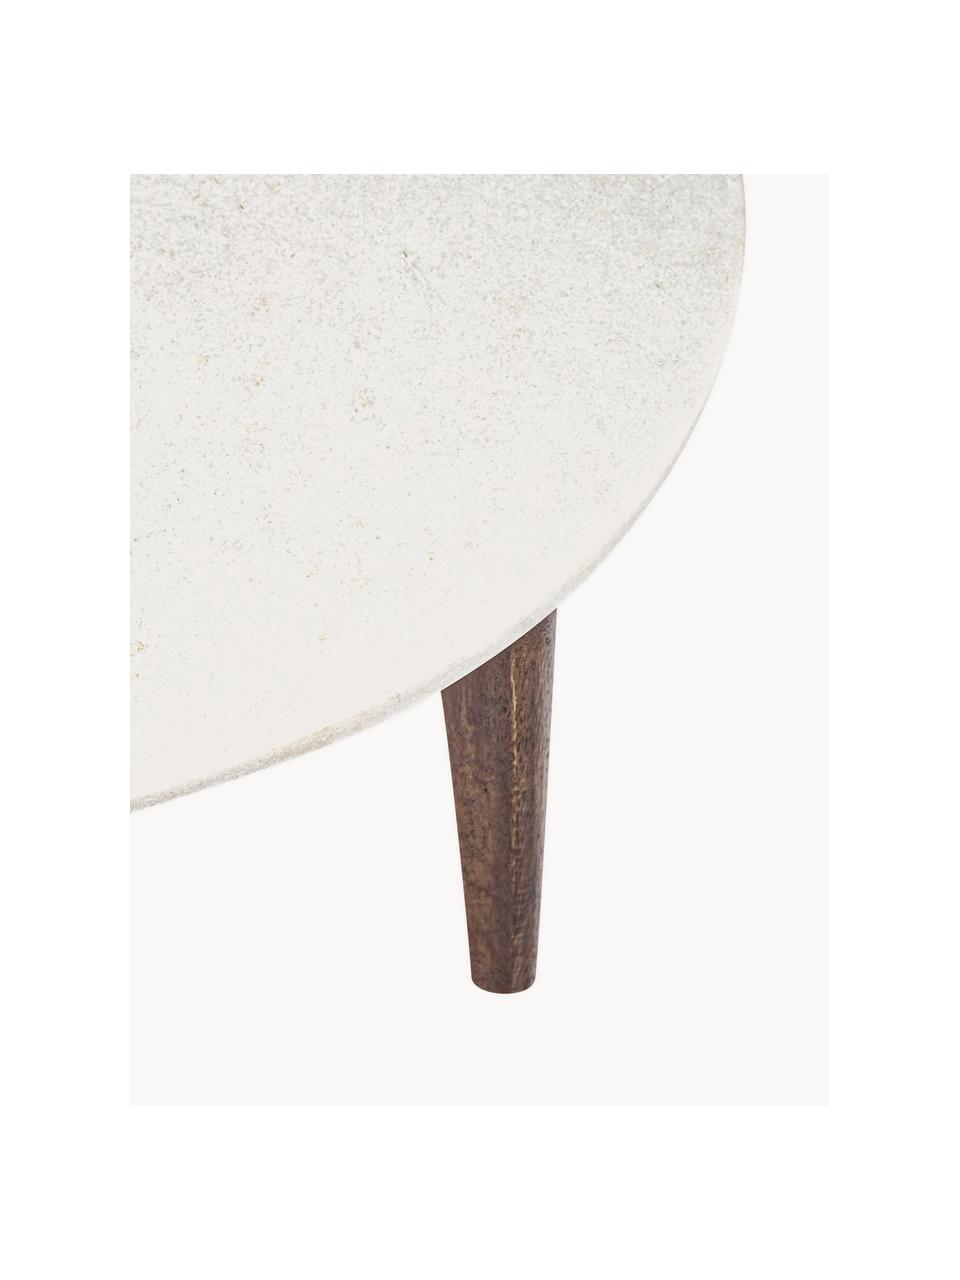 Runder Couchtisch Sylvester mit Marmorplatte, Tischplatte: Marmor, Beine: Mangoholz, Weiss marmoriert, Mangoholz, Ø 75 cm